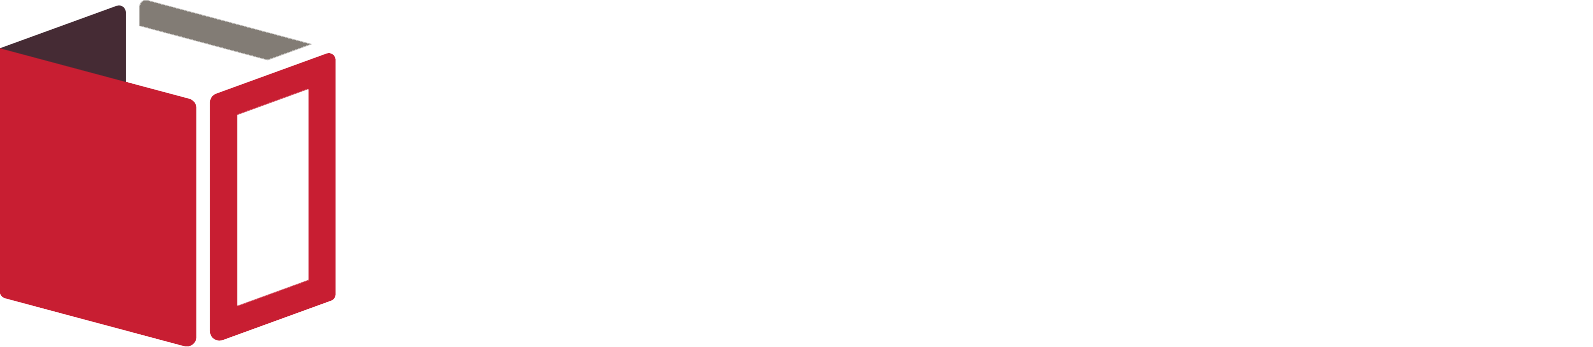 Gramedia Digital Publishing System Logo